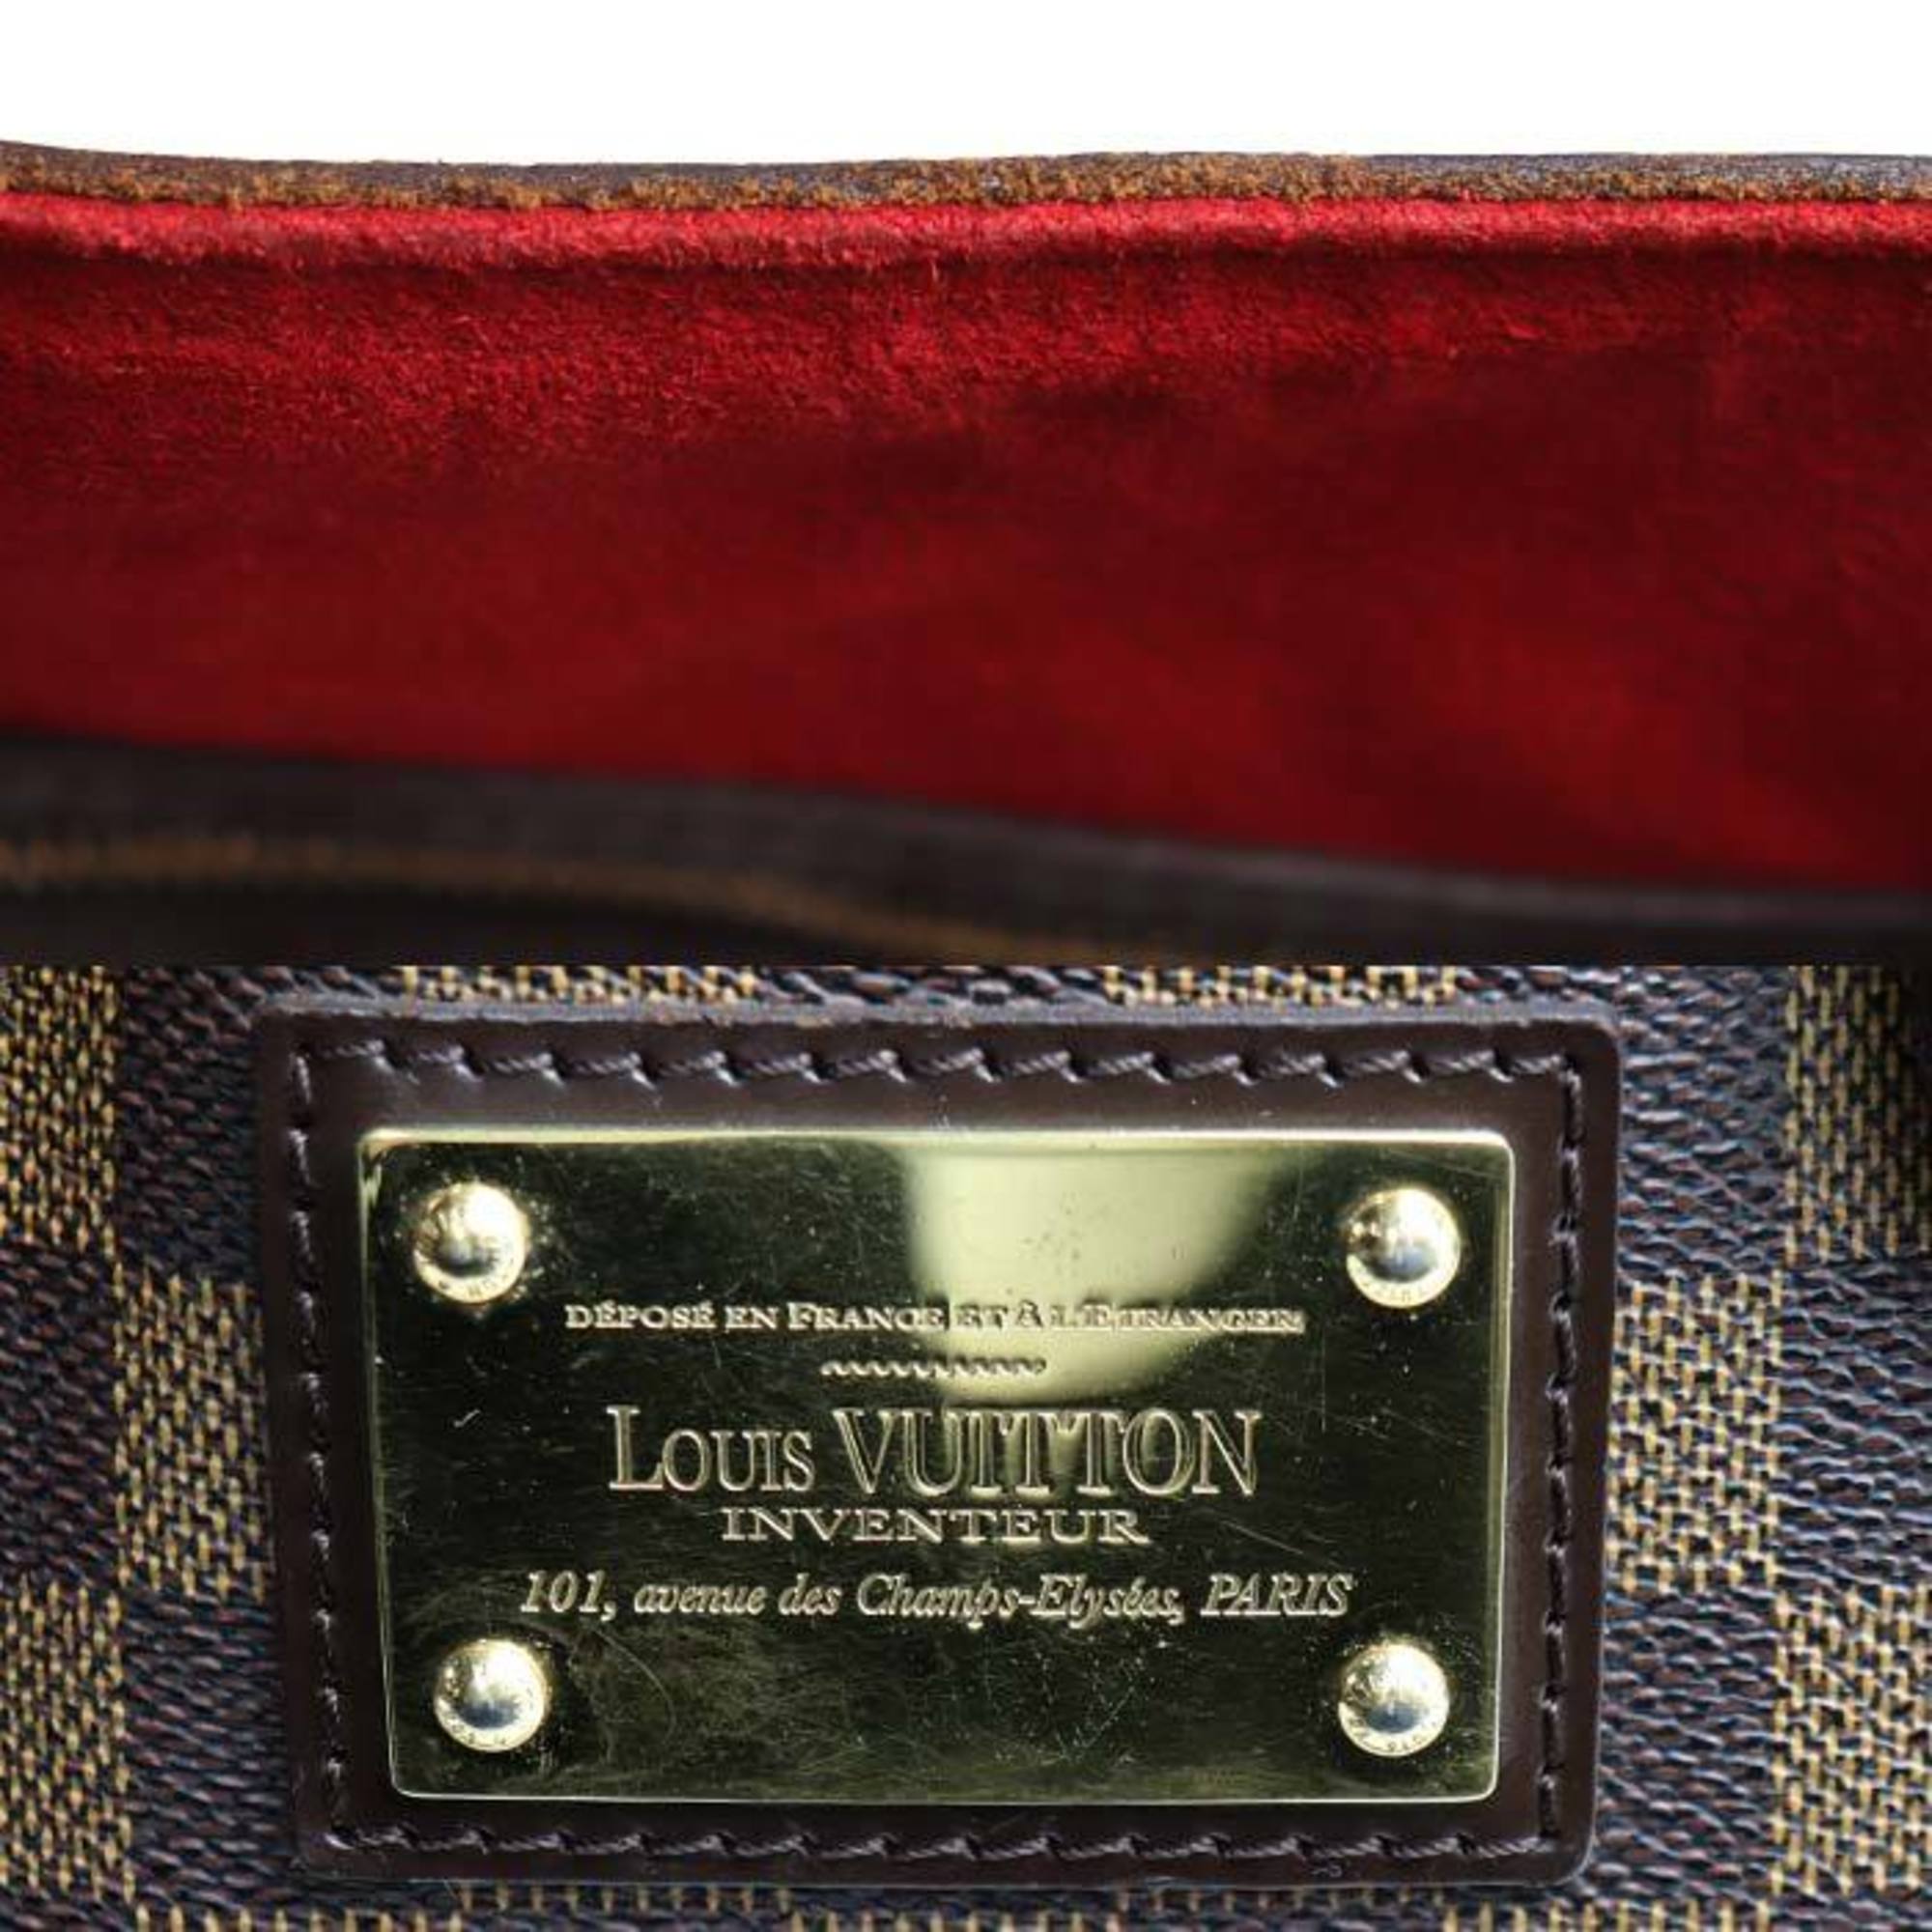 LOUIS VUITTON Louis Vuitton Hampstead PM Handbag Damier Brown N51205 CA0180 Women's